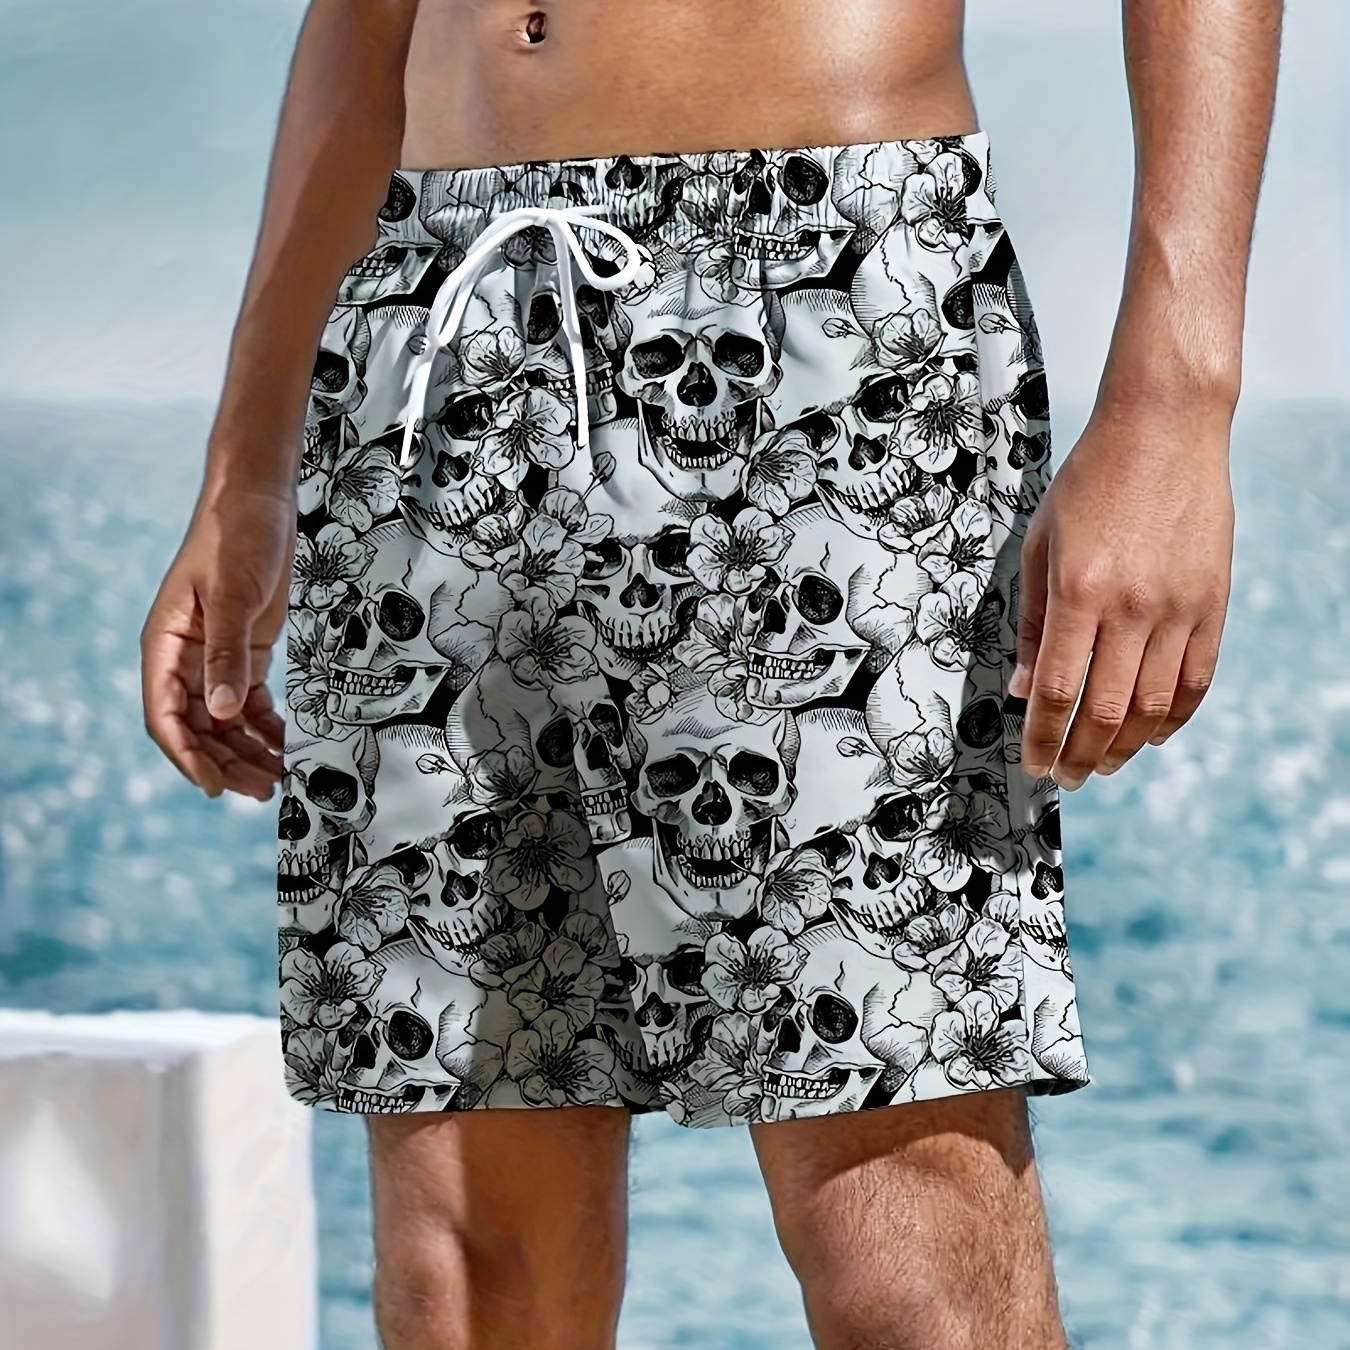 

Mens Swim Trunks Men's Casual Novelty Swimwear Shorts Beachwear Board Shorts With Pocket Drawstring, Skull